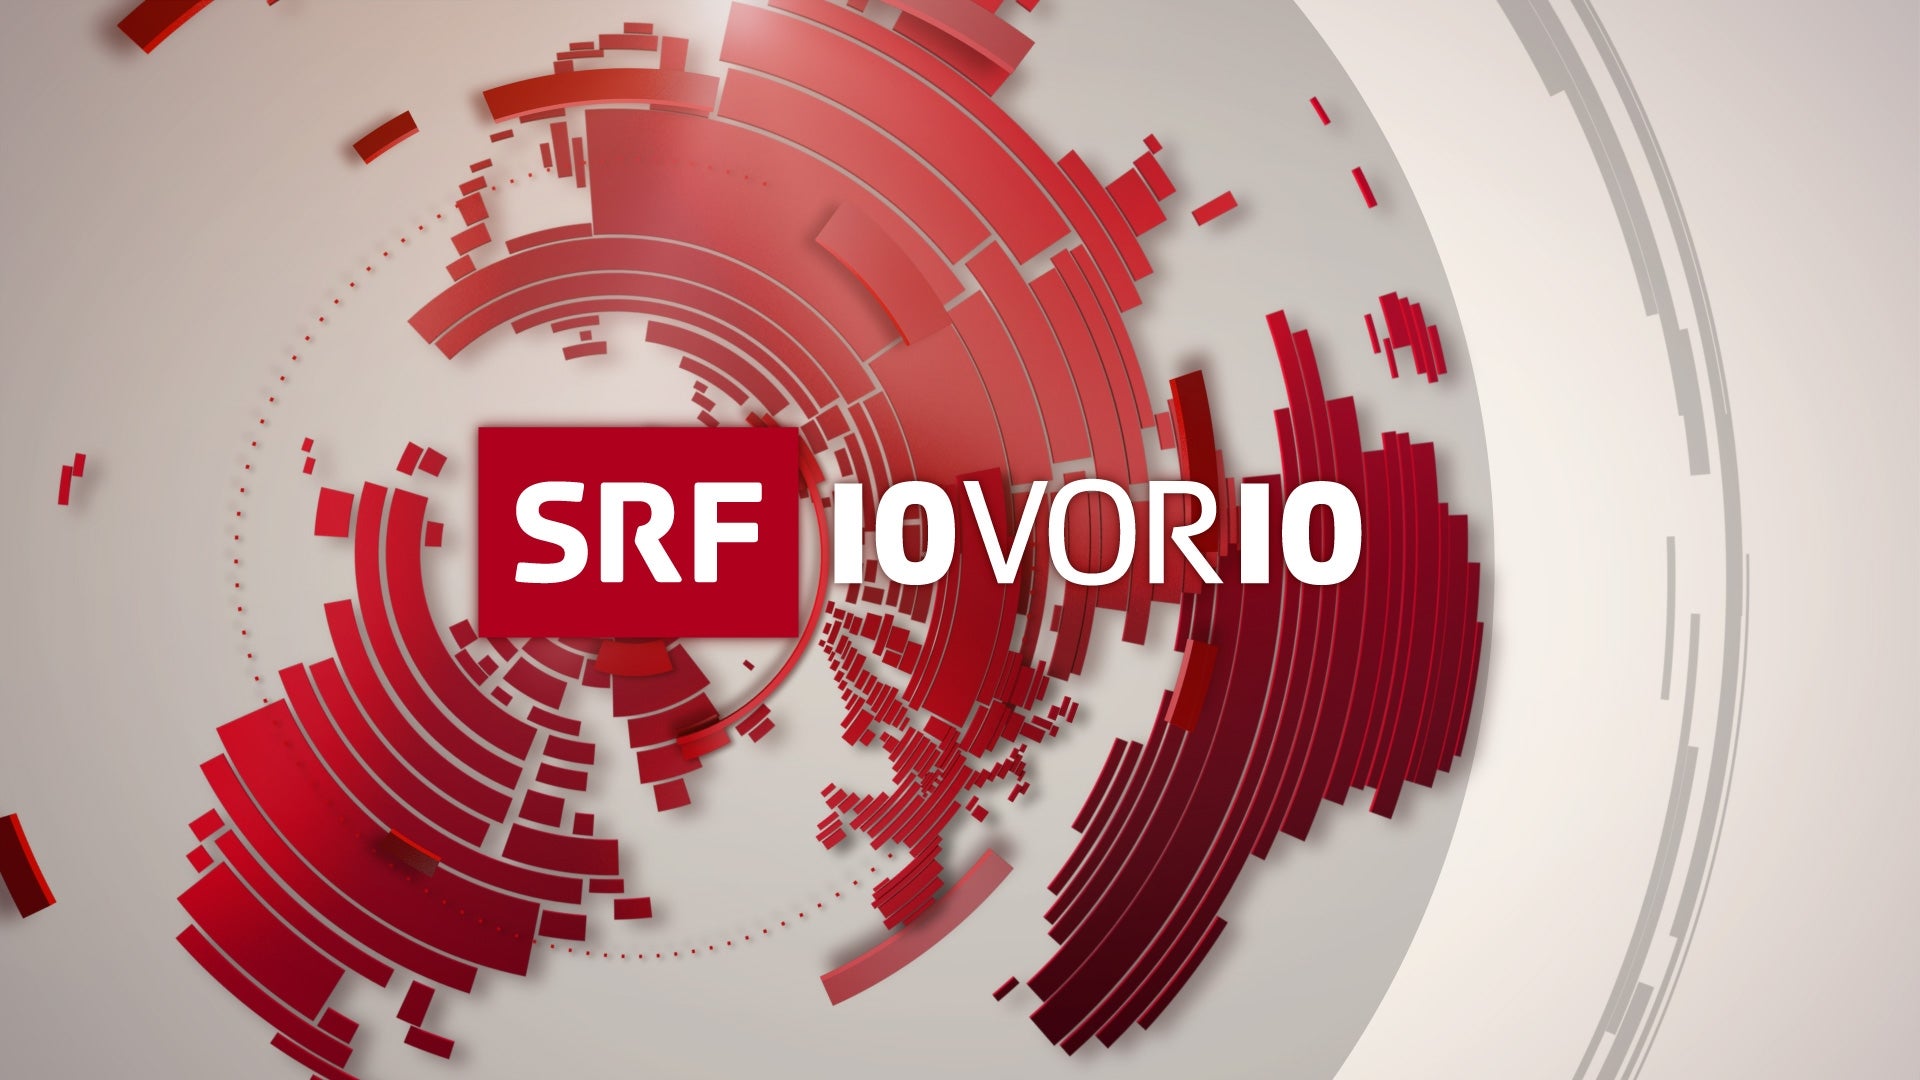 TV ratings for 10vor10 in France. SRF 1 TV series